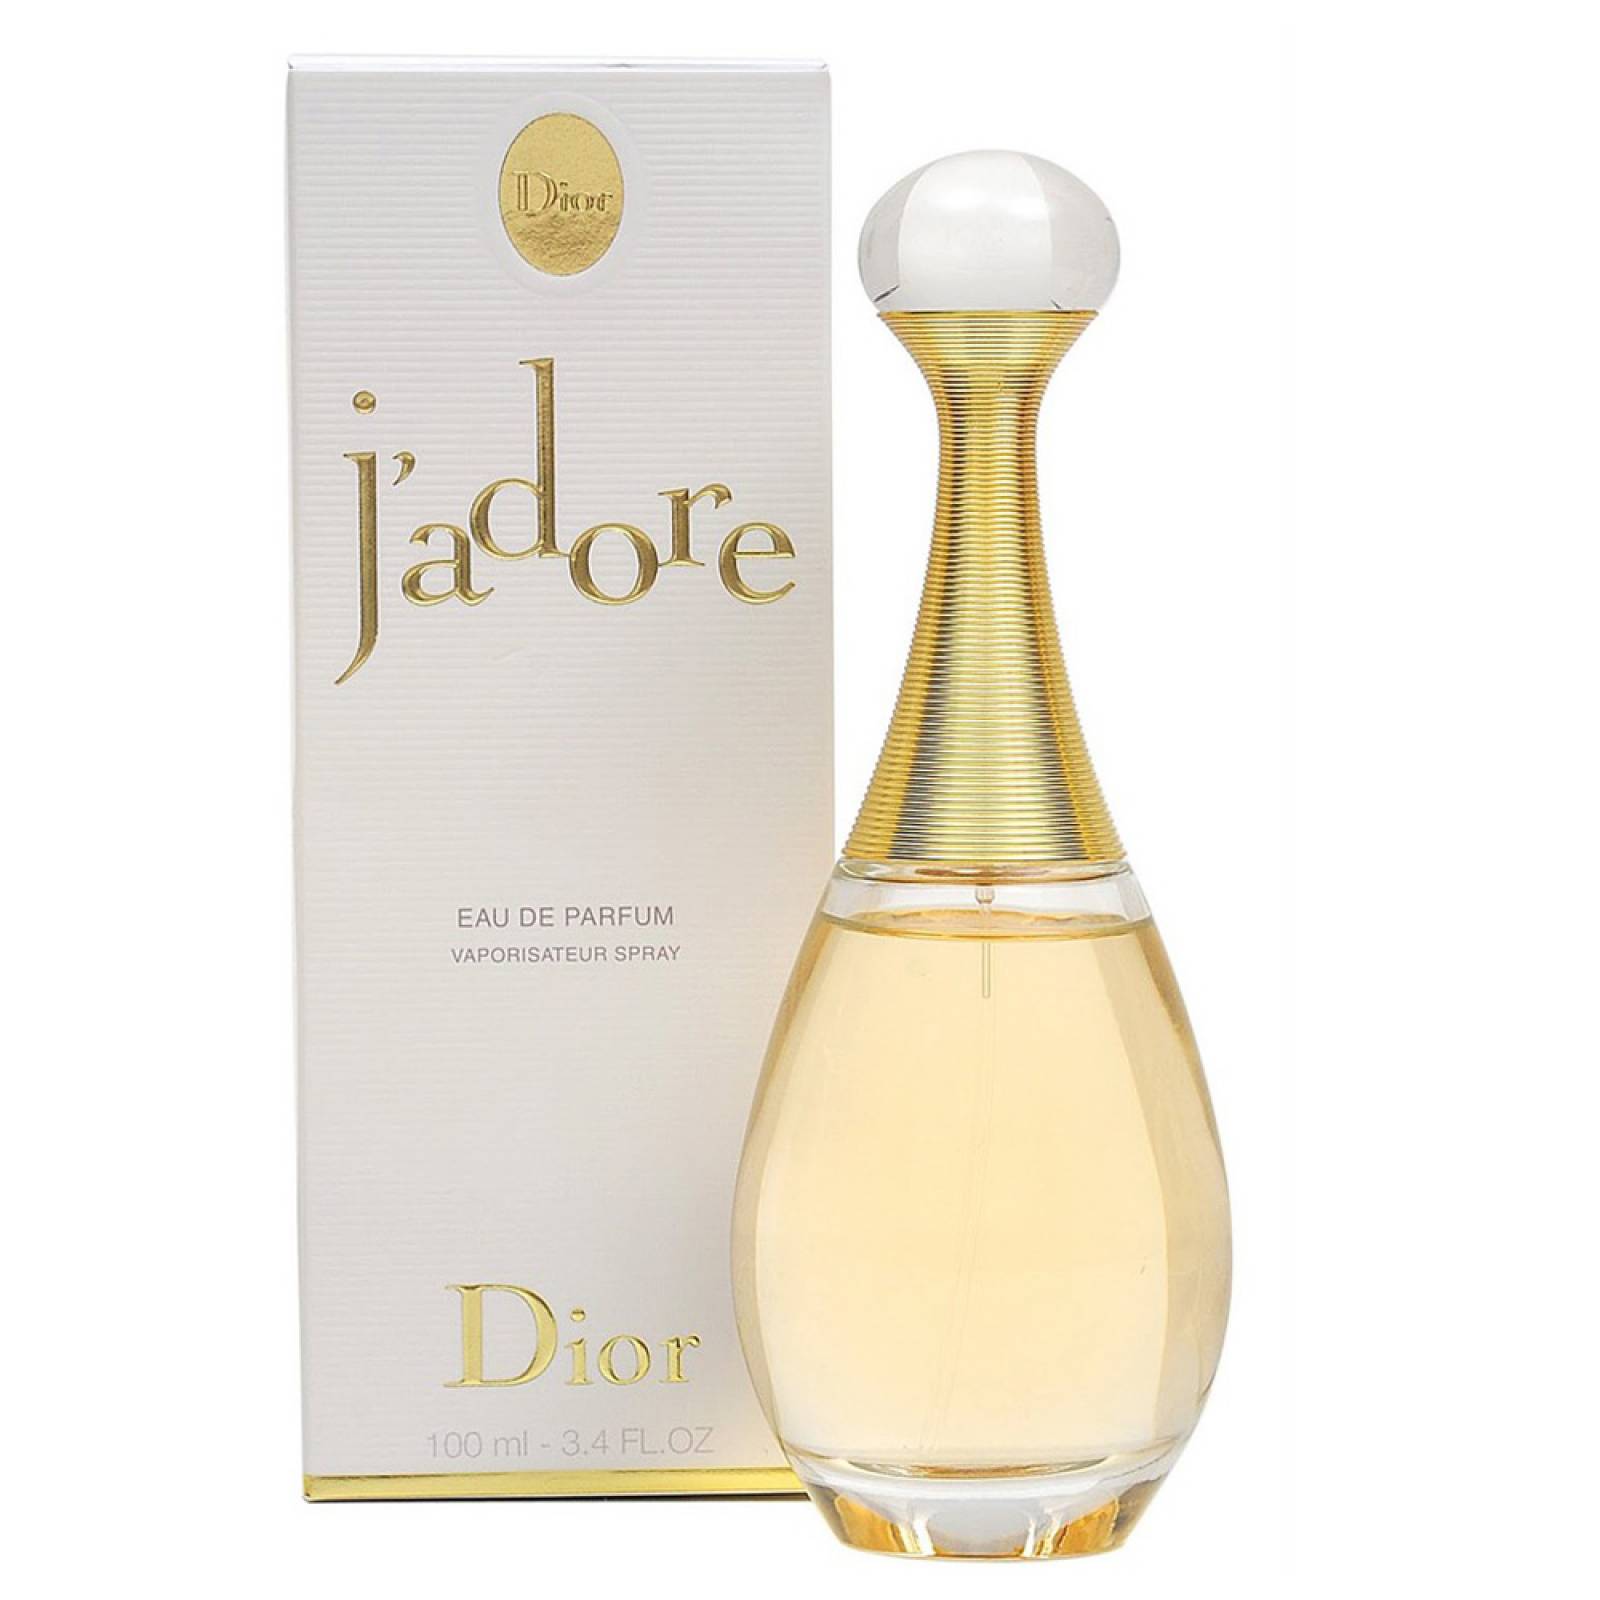 Jadore De Christian Dior Eau de Parfum 100 ml